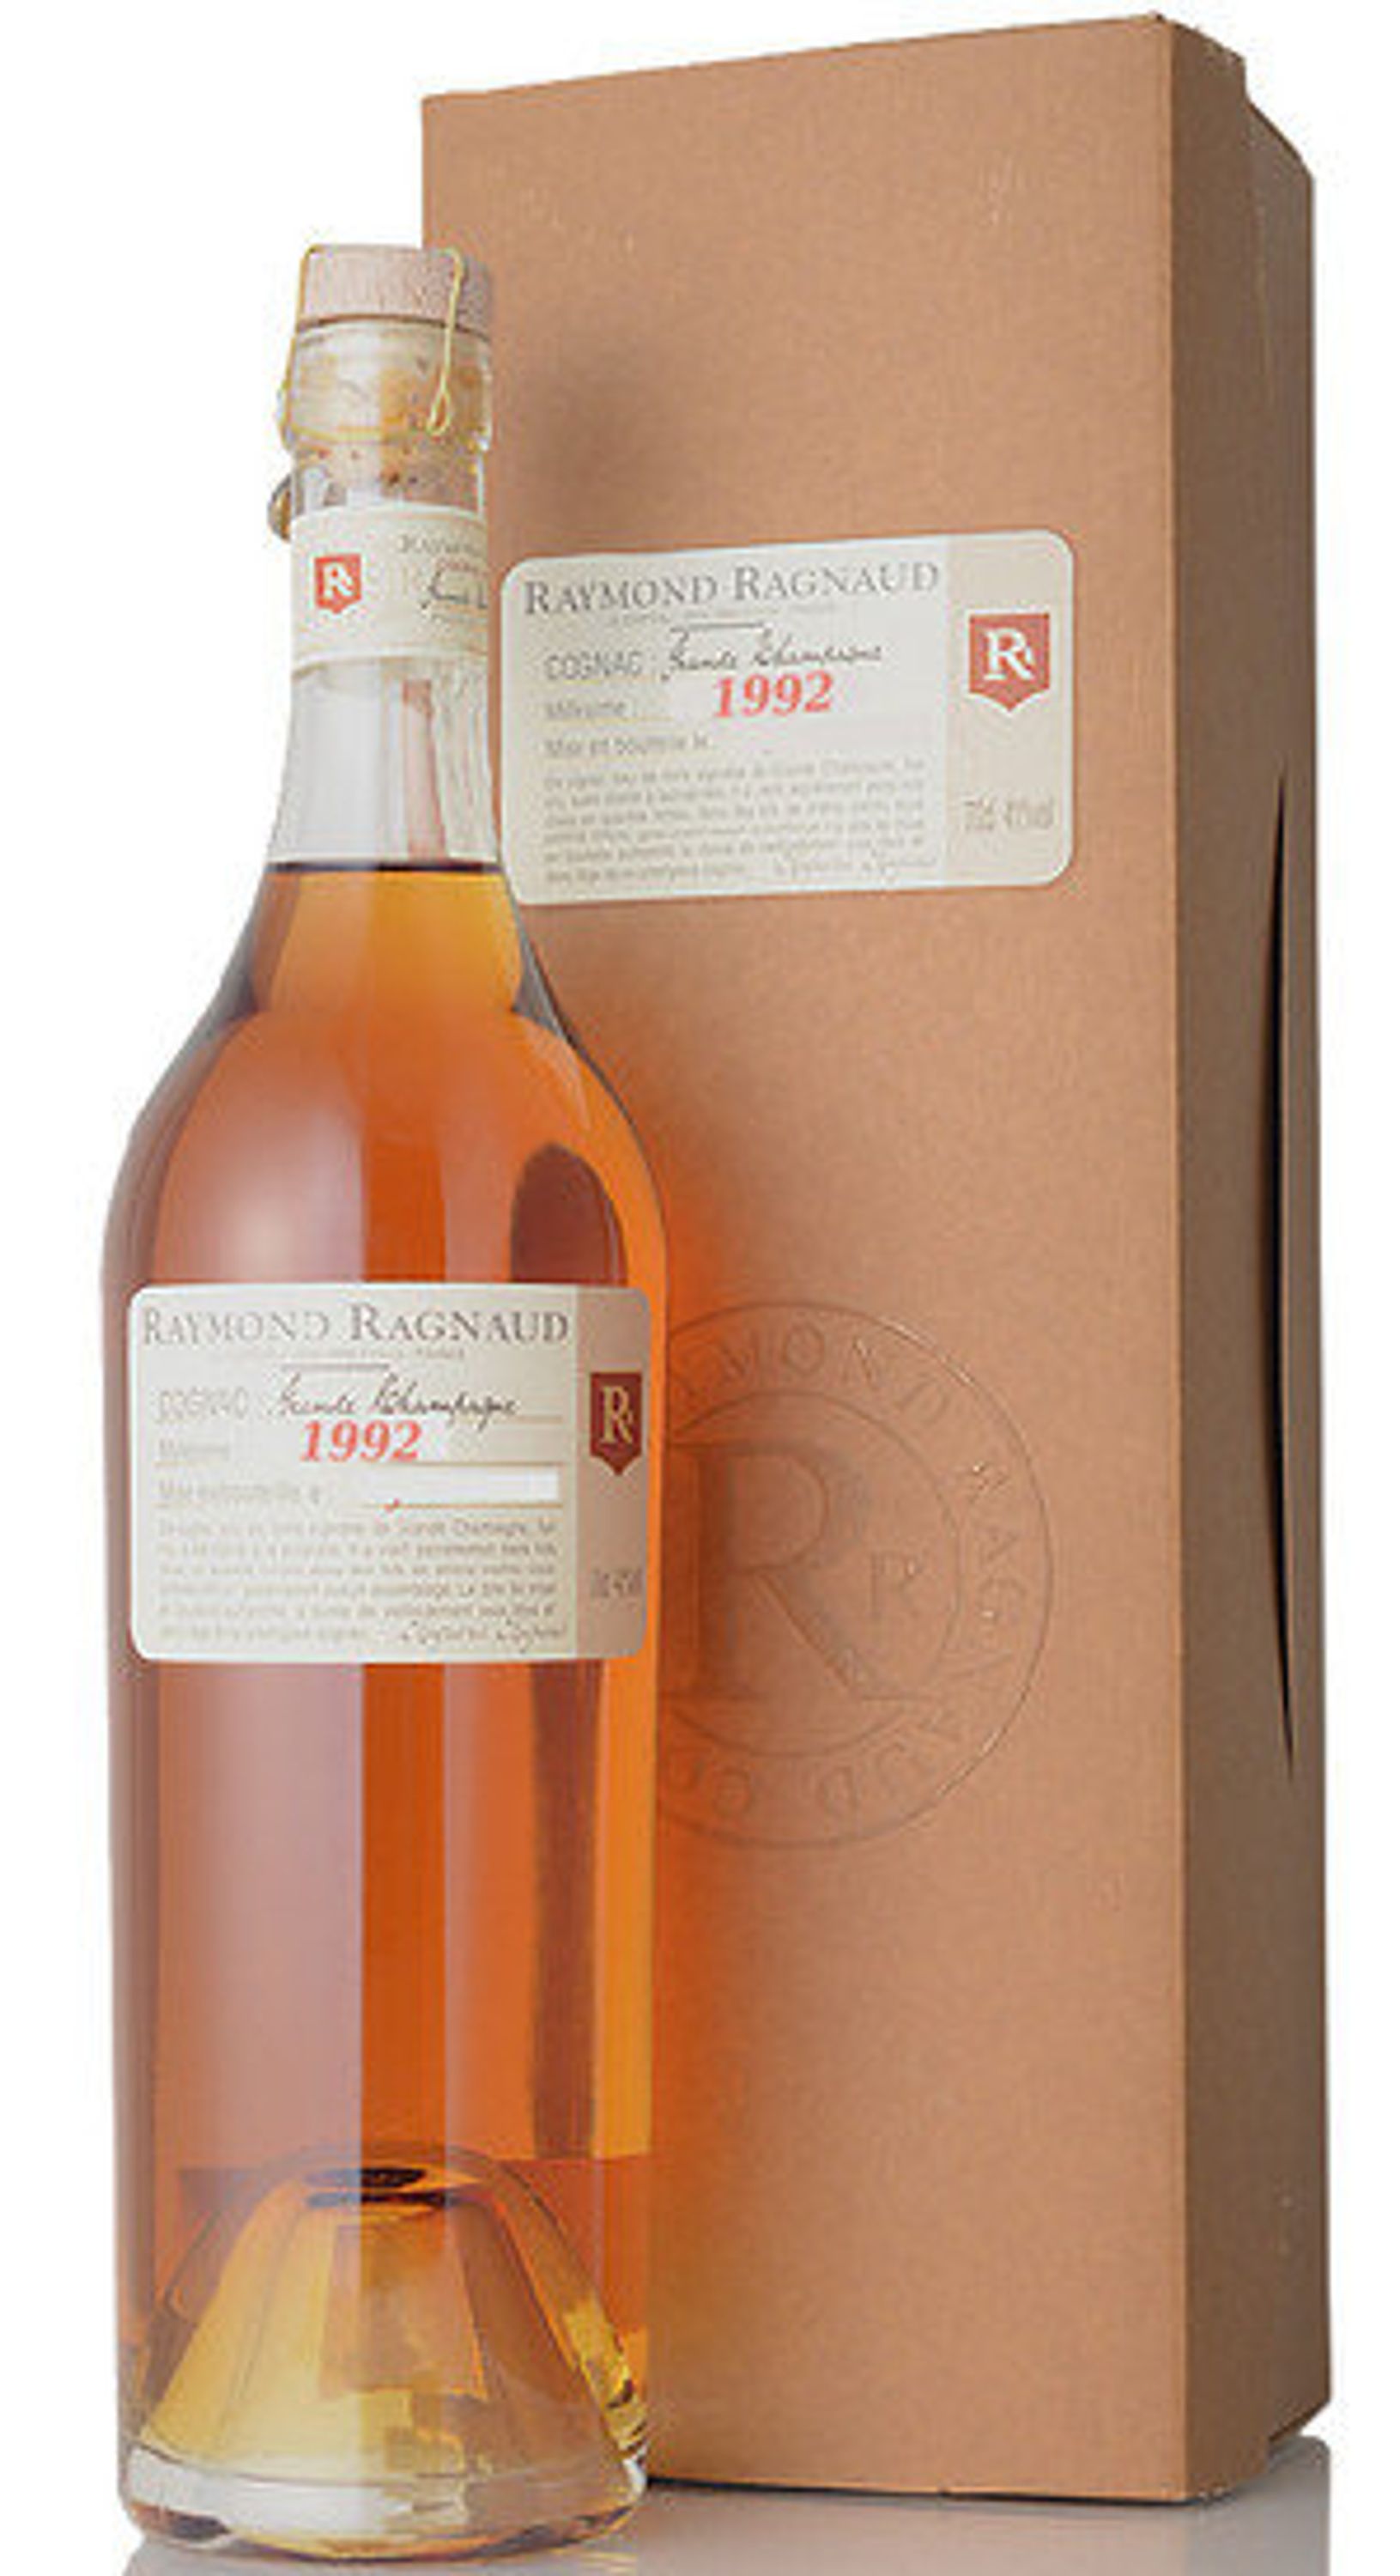 Raymond Ragnaud 1992 0.7l, alc. 41% by volume, Cognac France